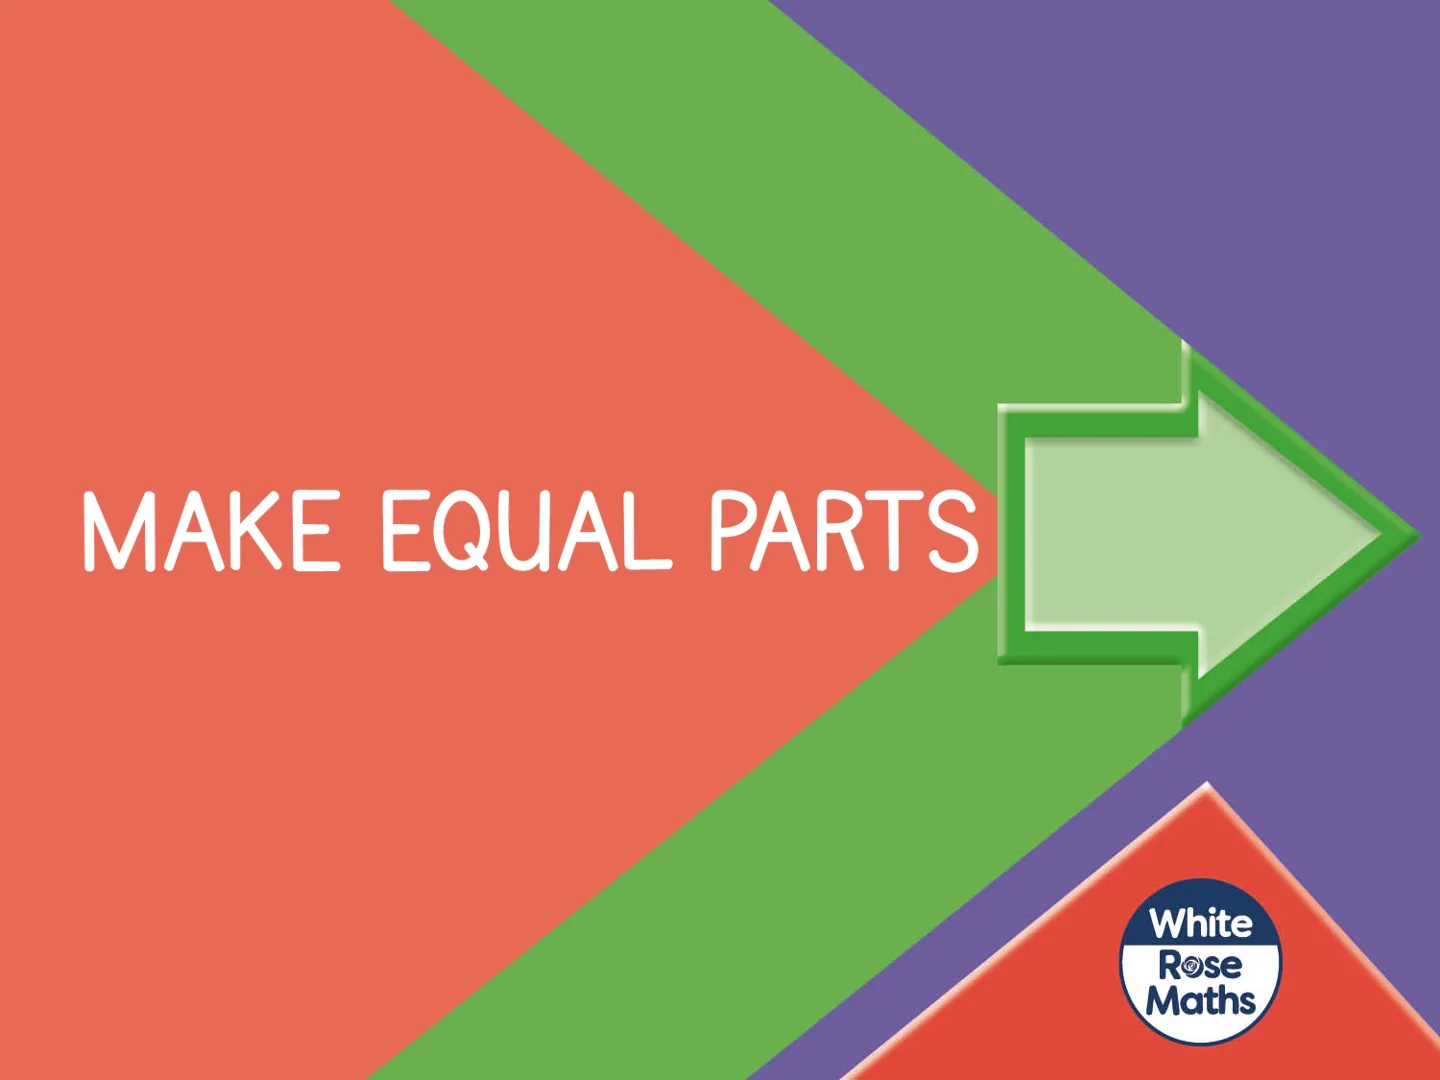 Step 1 - Make equal parts on Vimeo